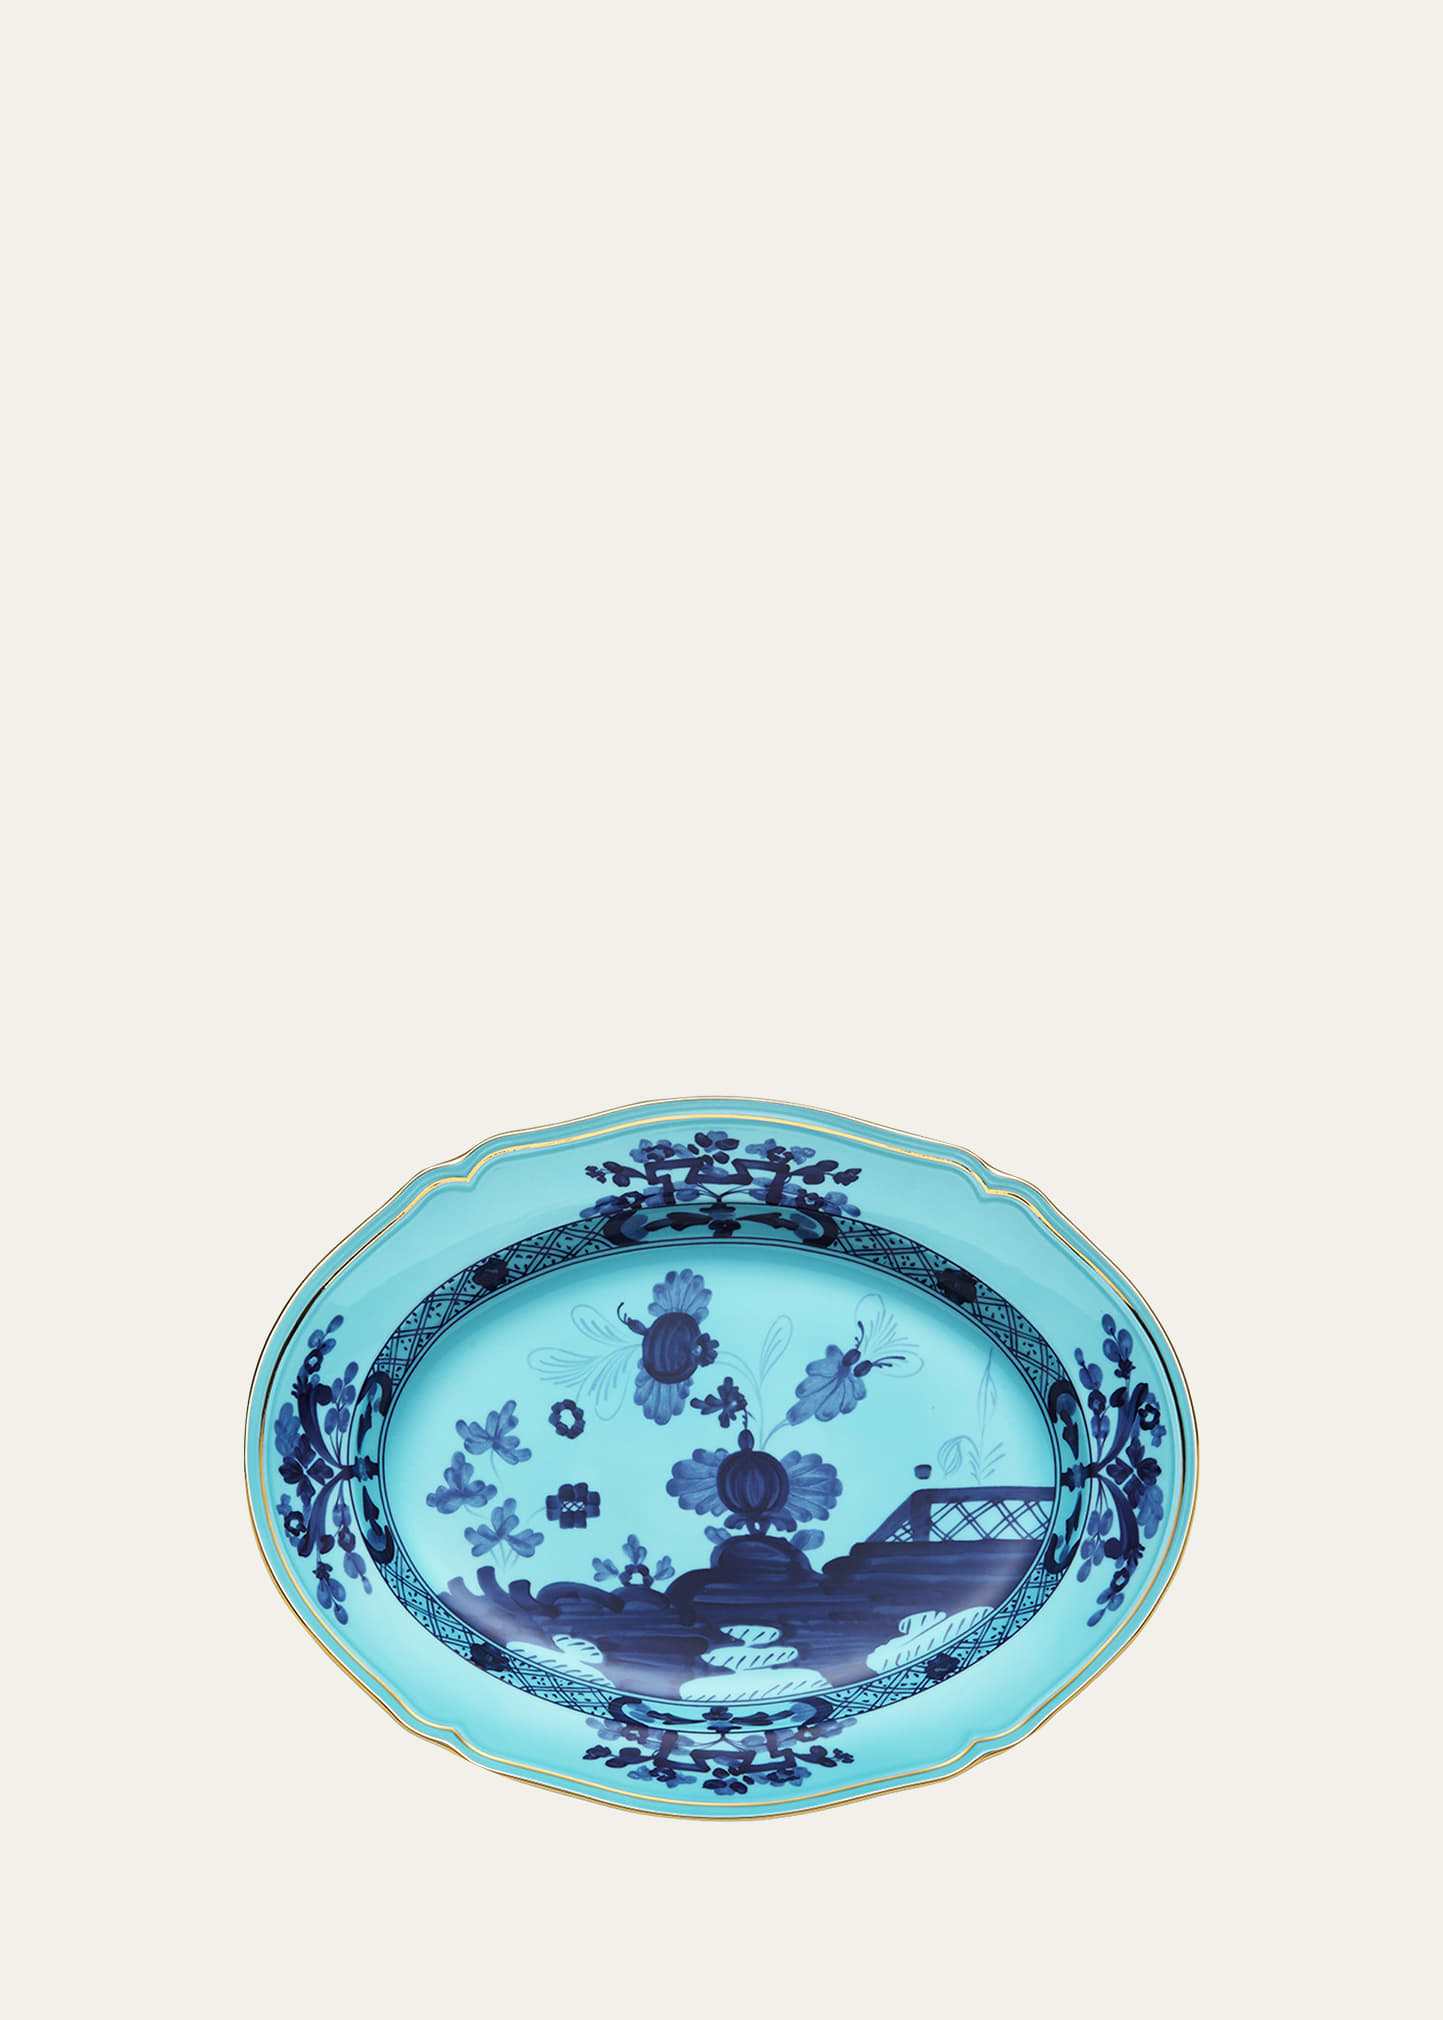 Ginori 1735 Oriente Italiano Oval Platter, Iris In Blue